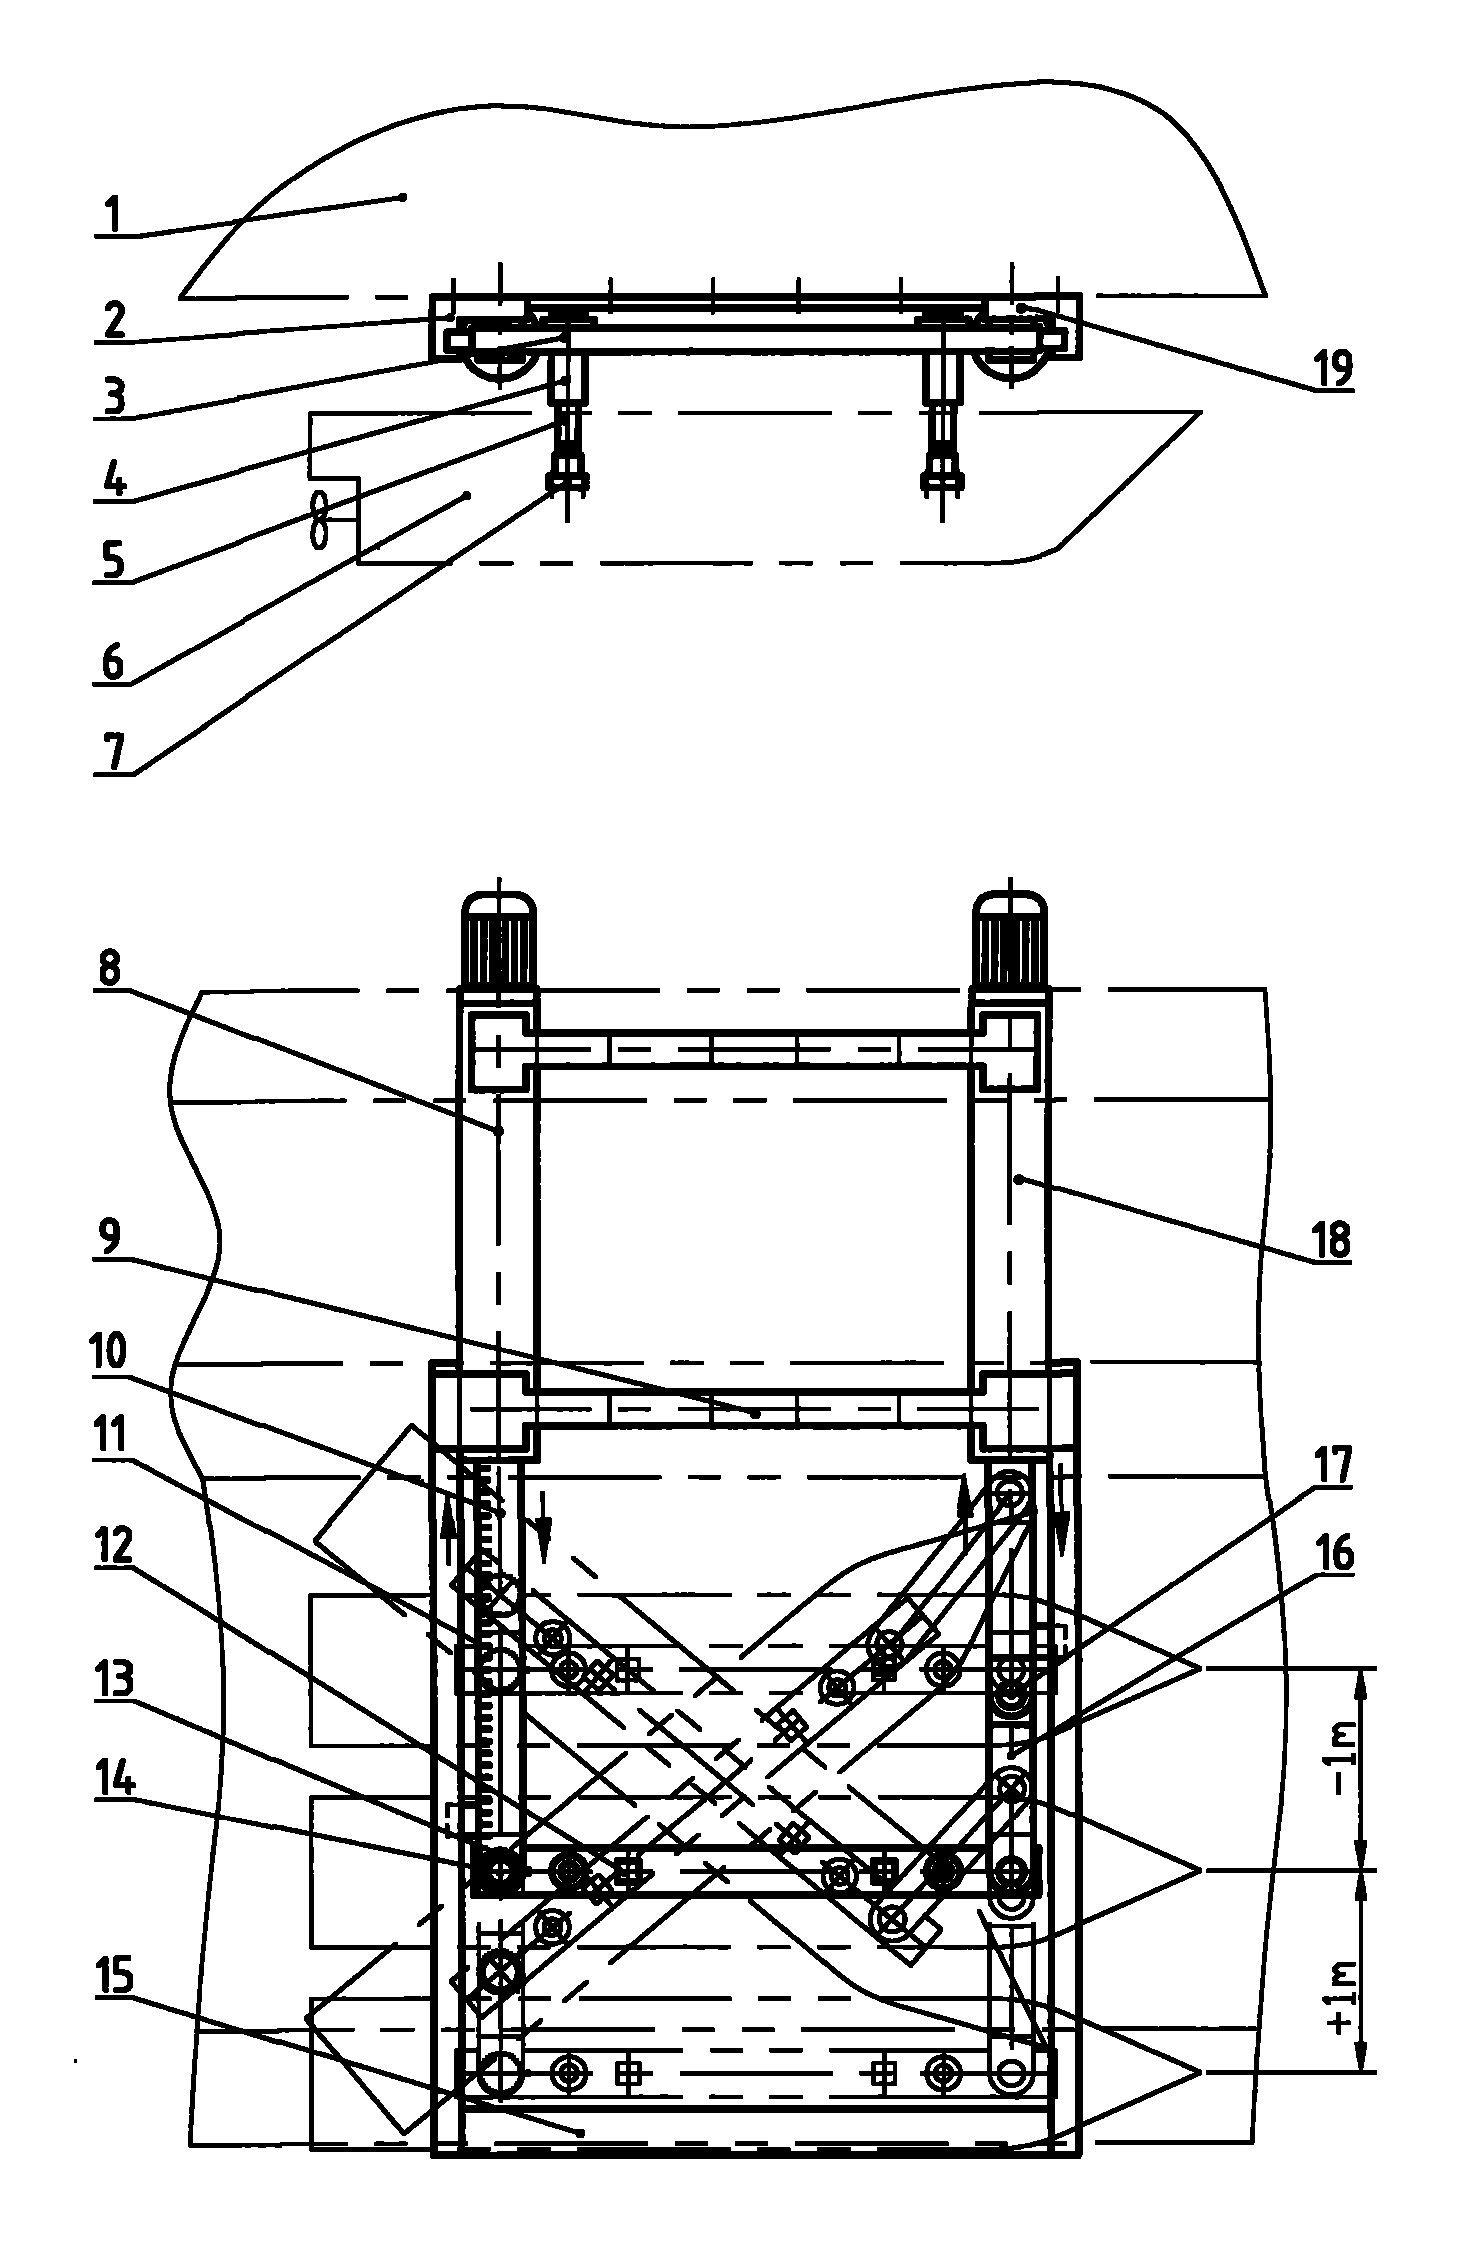 Linkage type horizontal planar motion mechanism